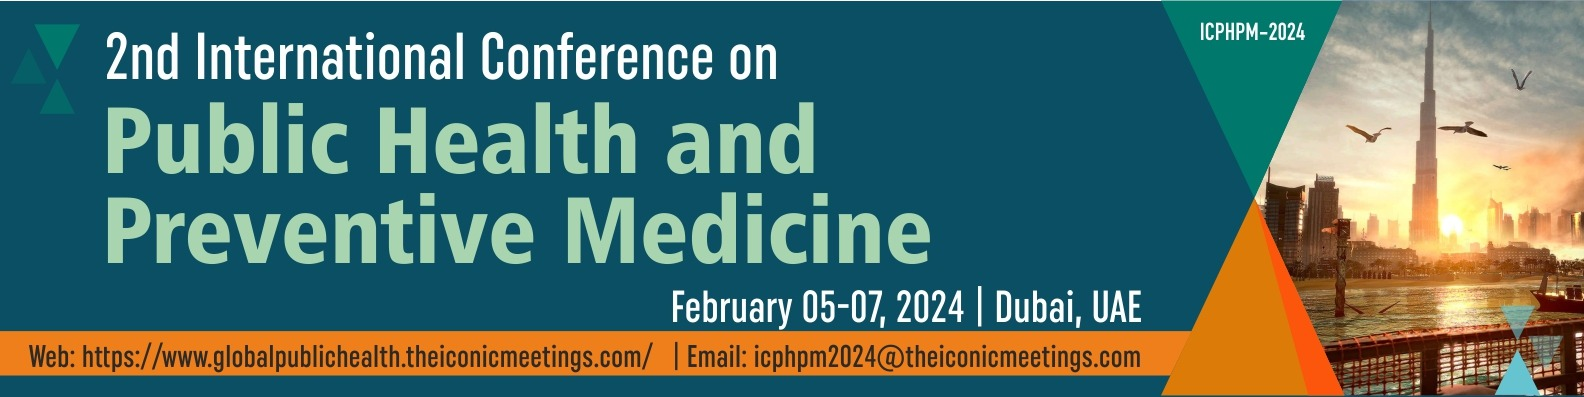 International Conference on Public Health and Preventive Medicine